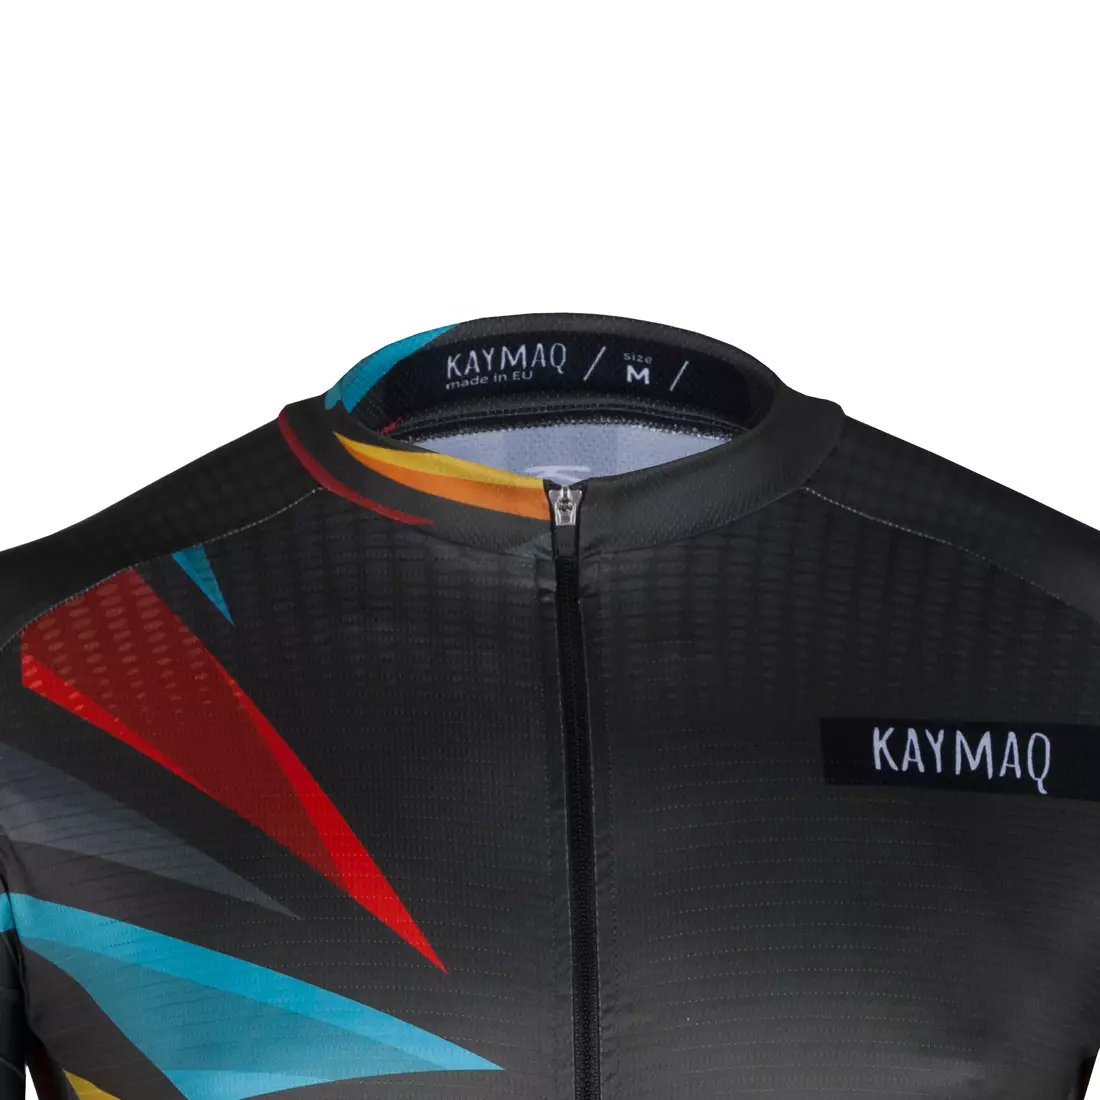 KAYMAQ M47 RACE pánský cyklistický dres